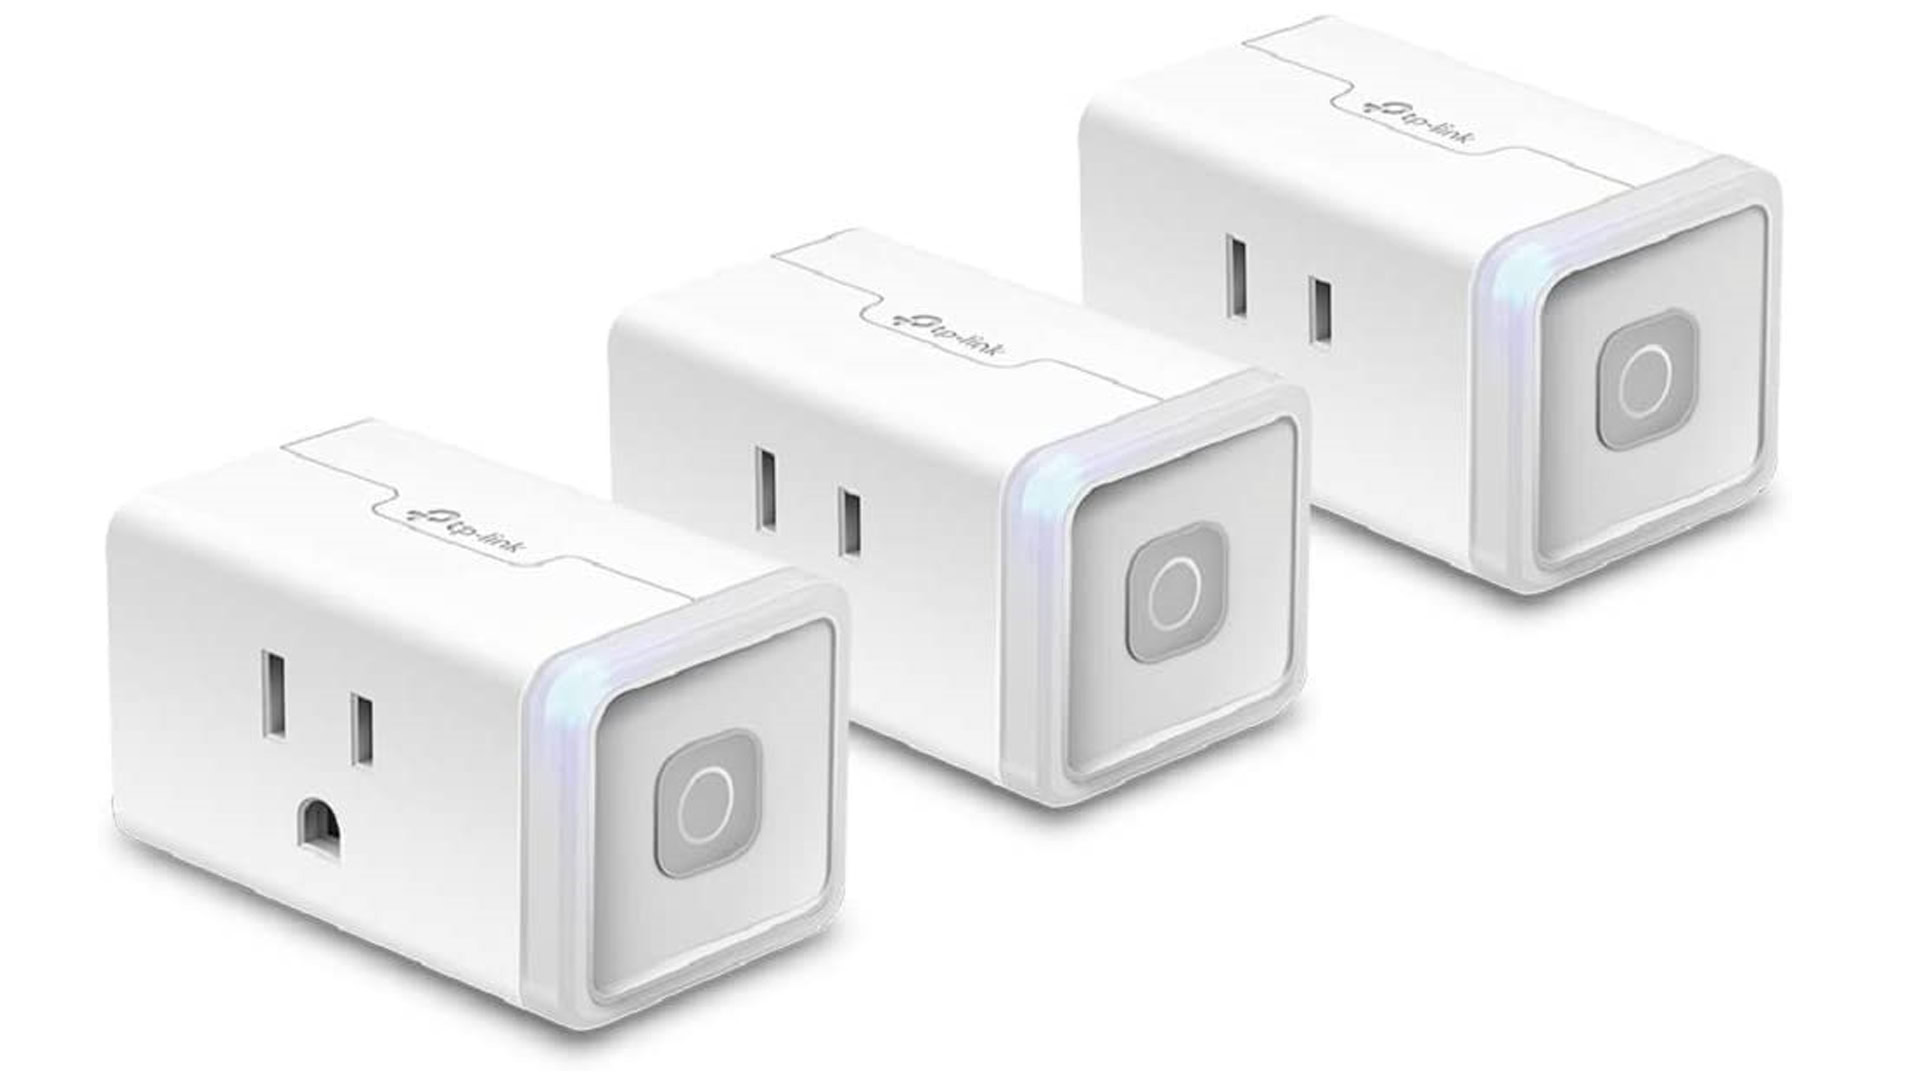 Meross smart plug review - affordable HomeKit smart plug - HomeKit Authority